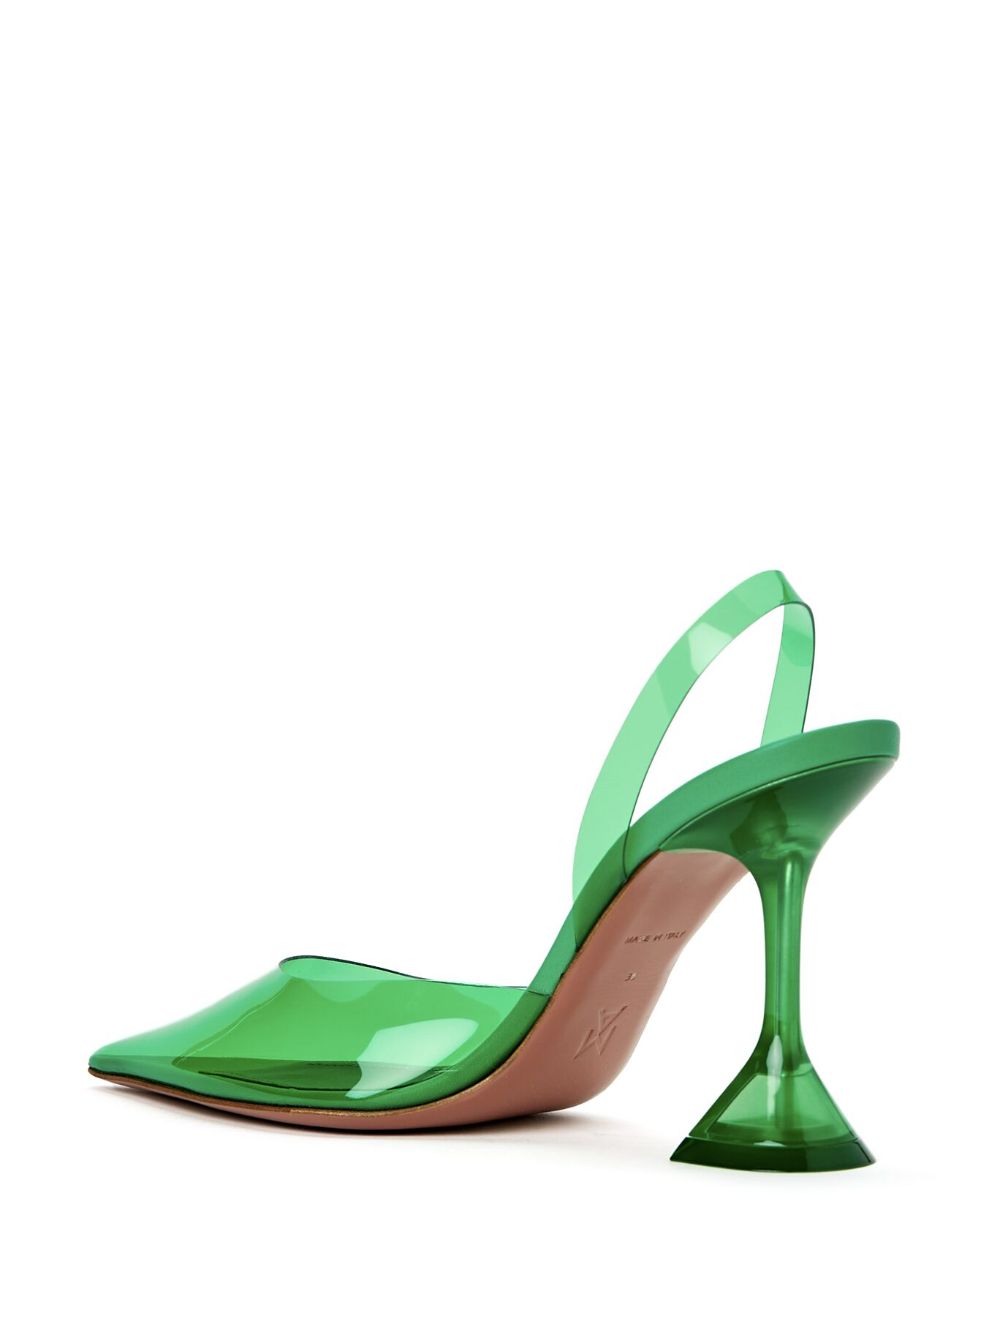 Amina Muaddi Green Holli Glass Sling Heels | ModeSens